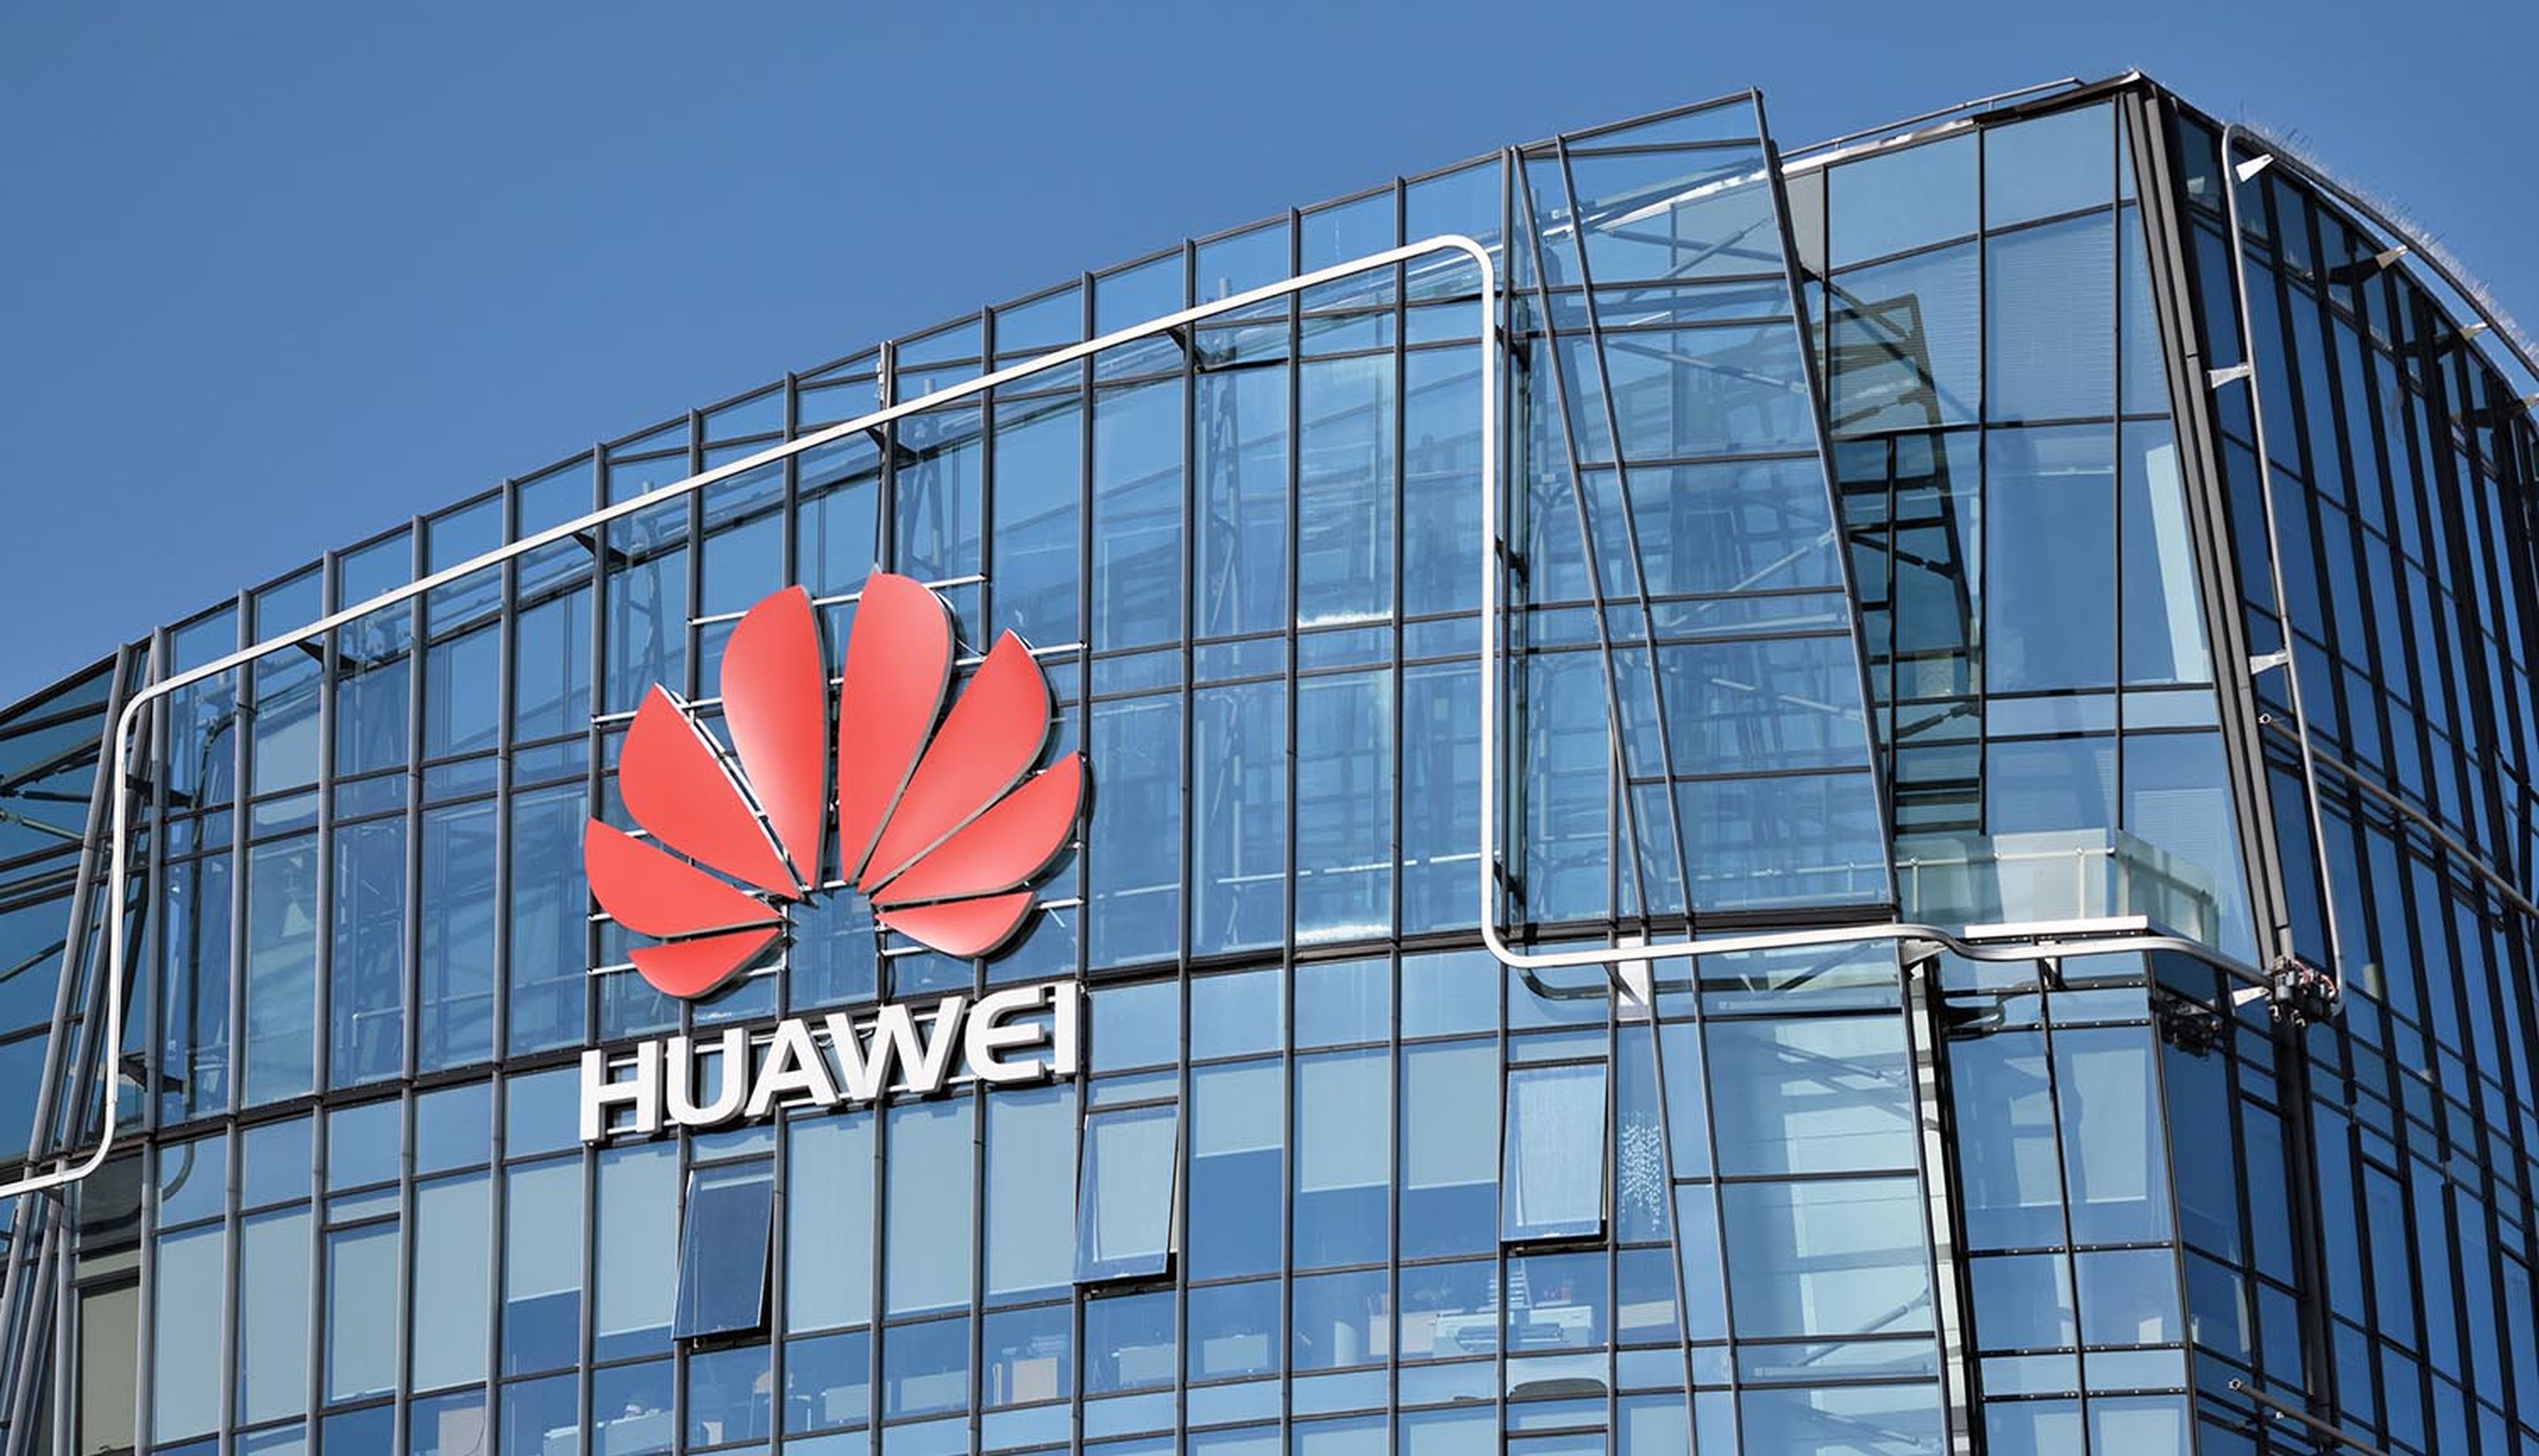 Oficinas y logo Huawei